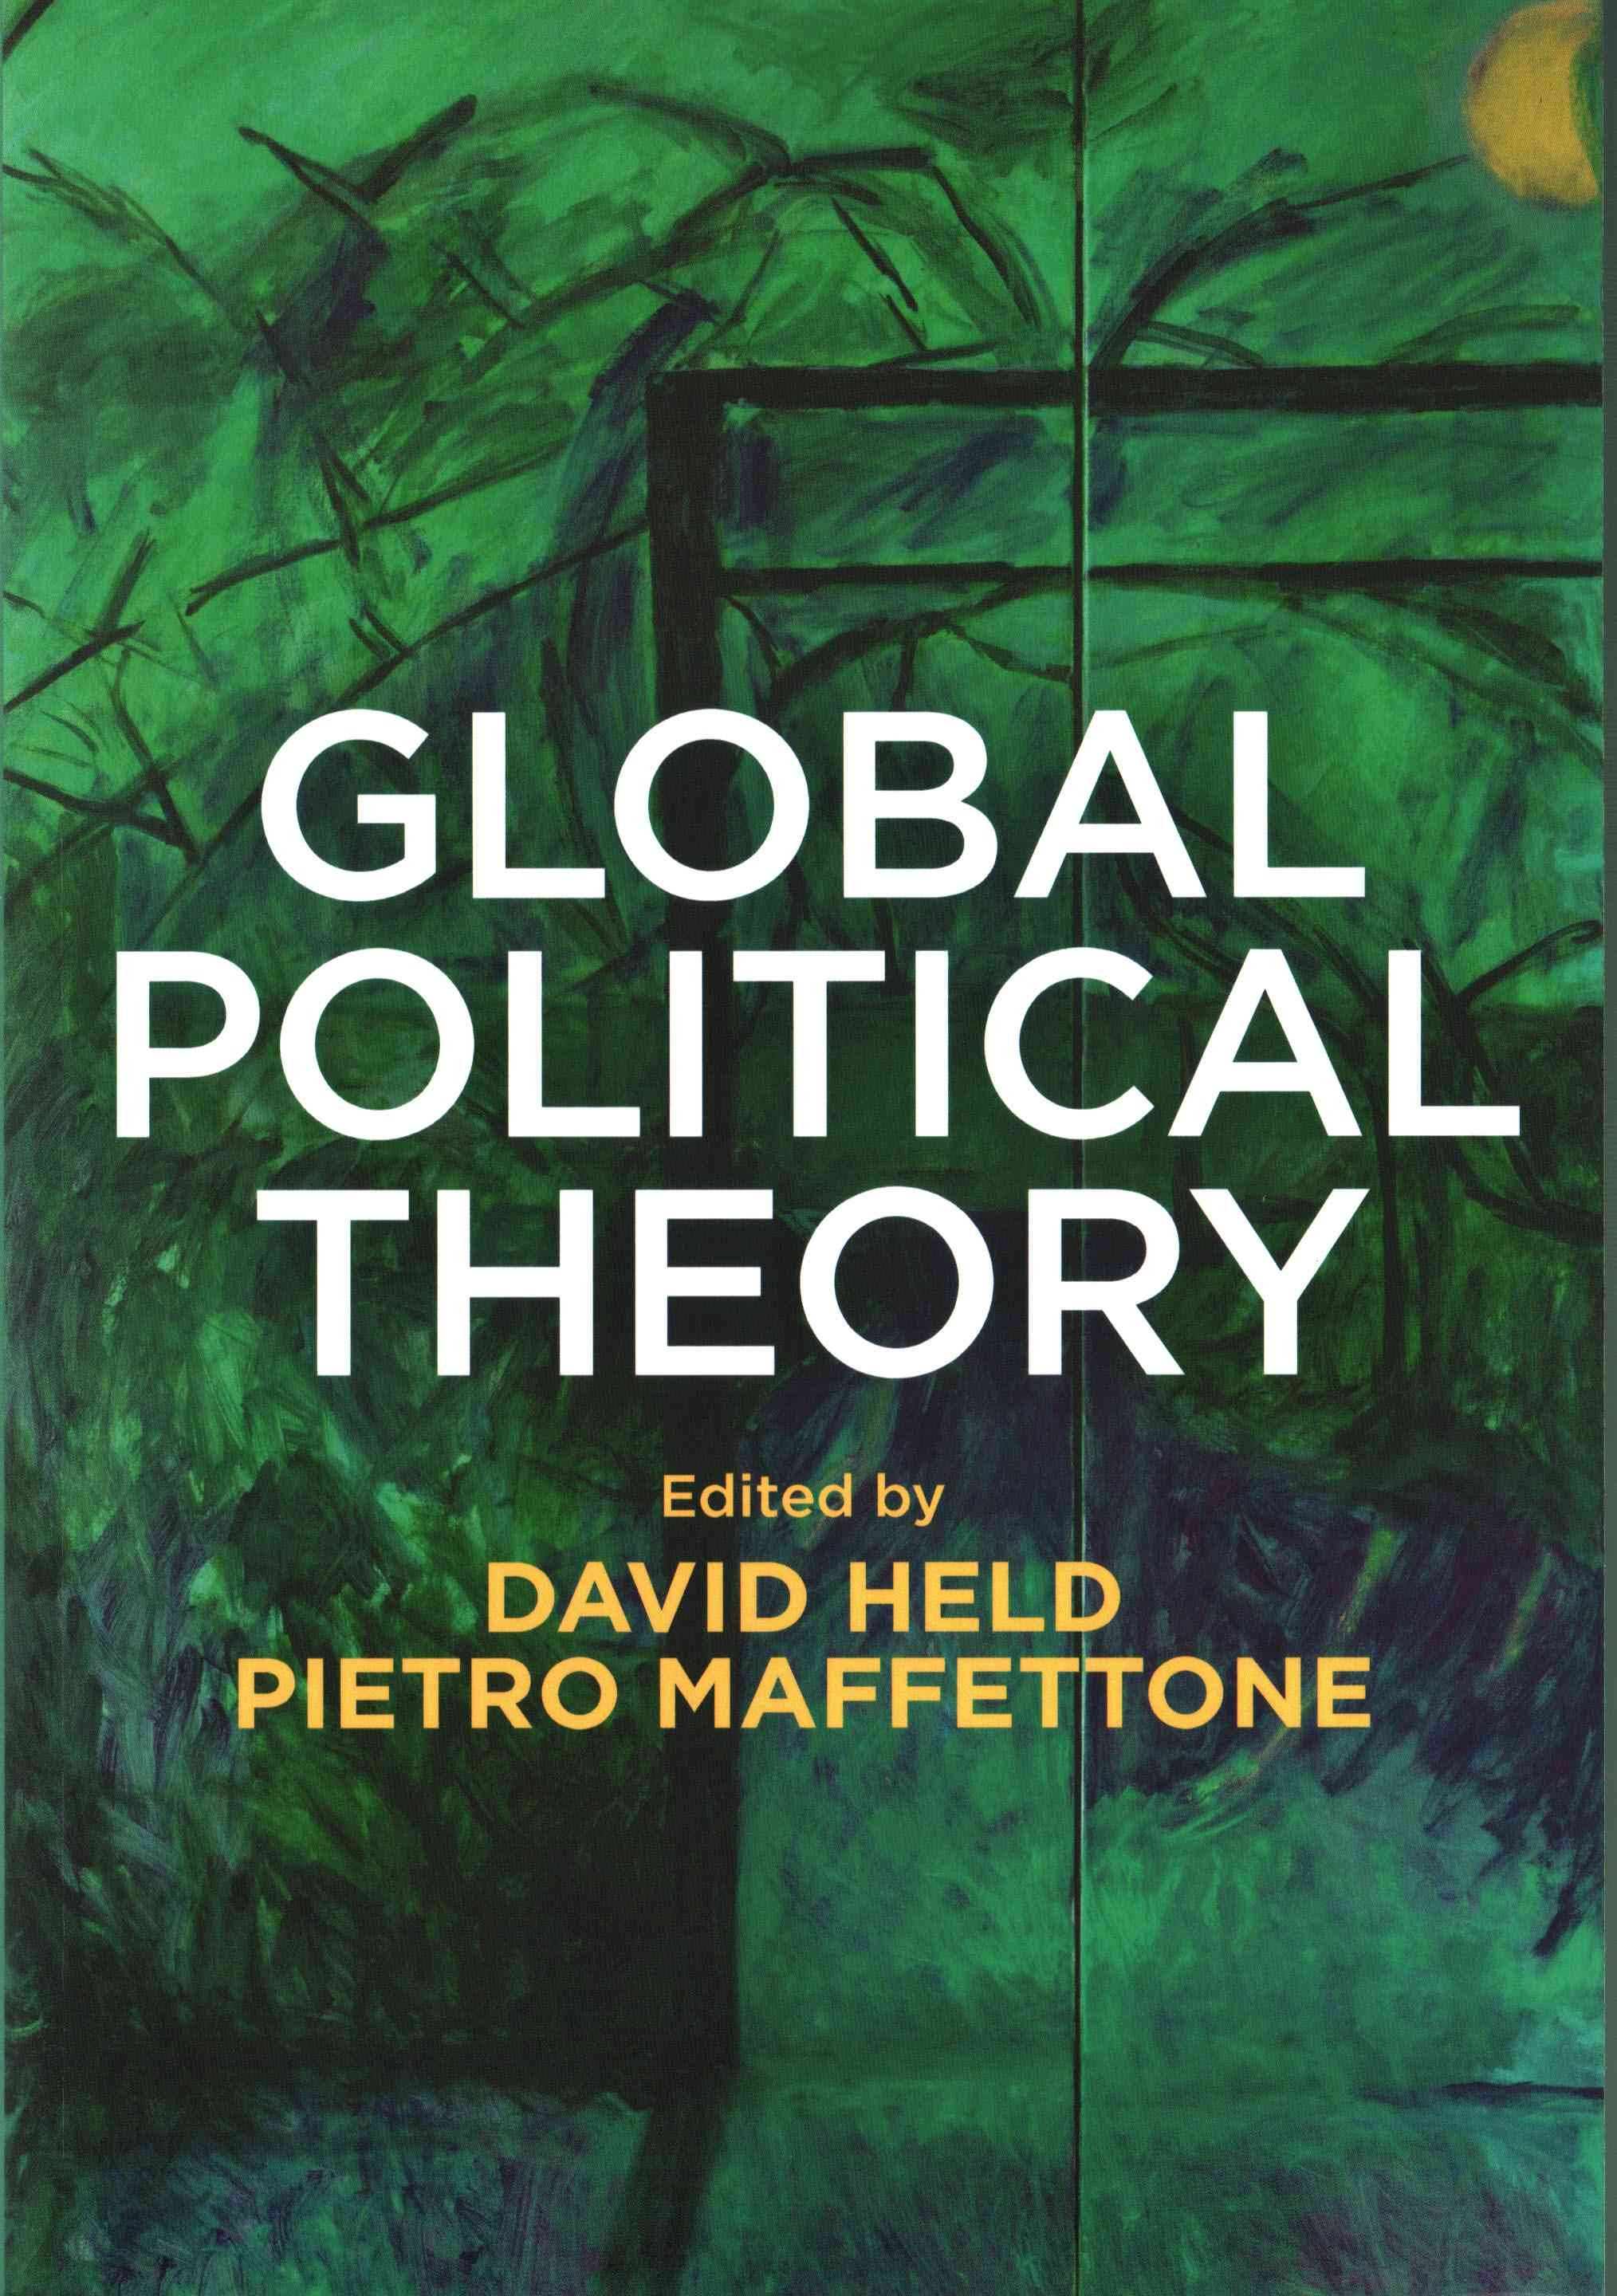 Global political theory